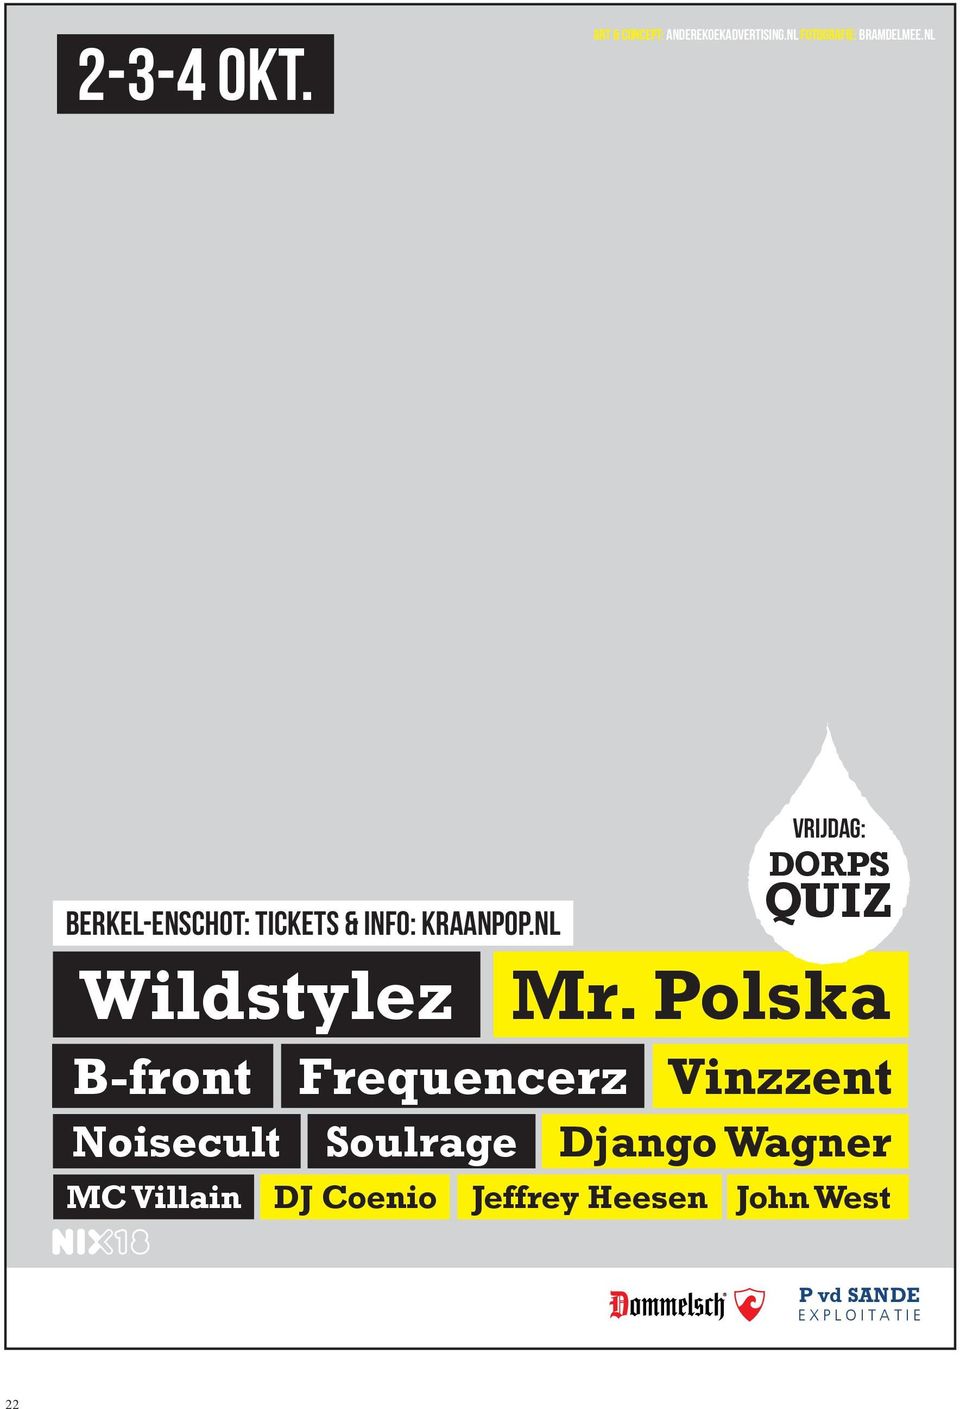 nl Wildstylez B-front Noisecult Soulrage vrijdag: DORPS QUIZ Mr.